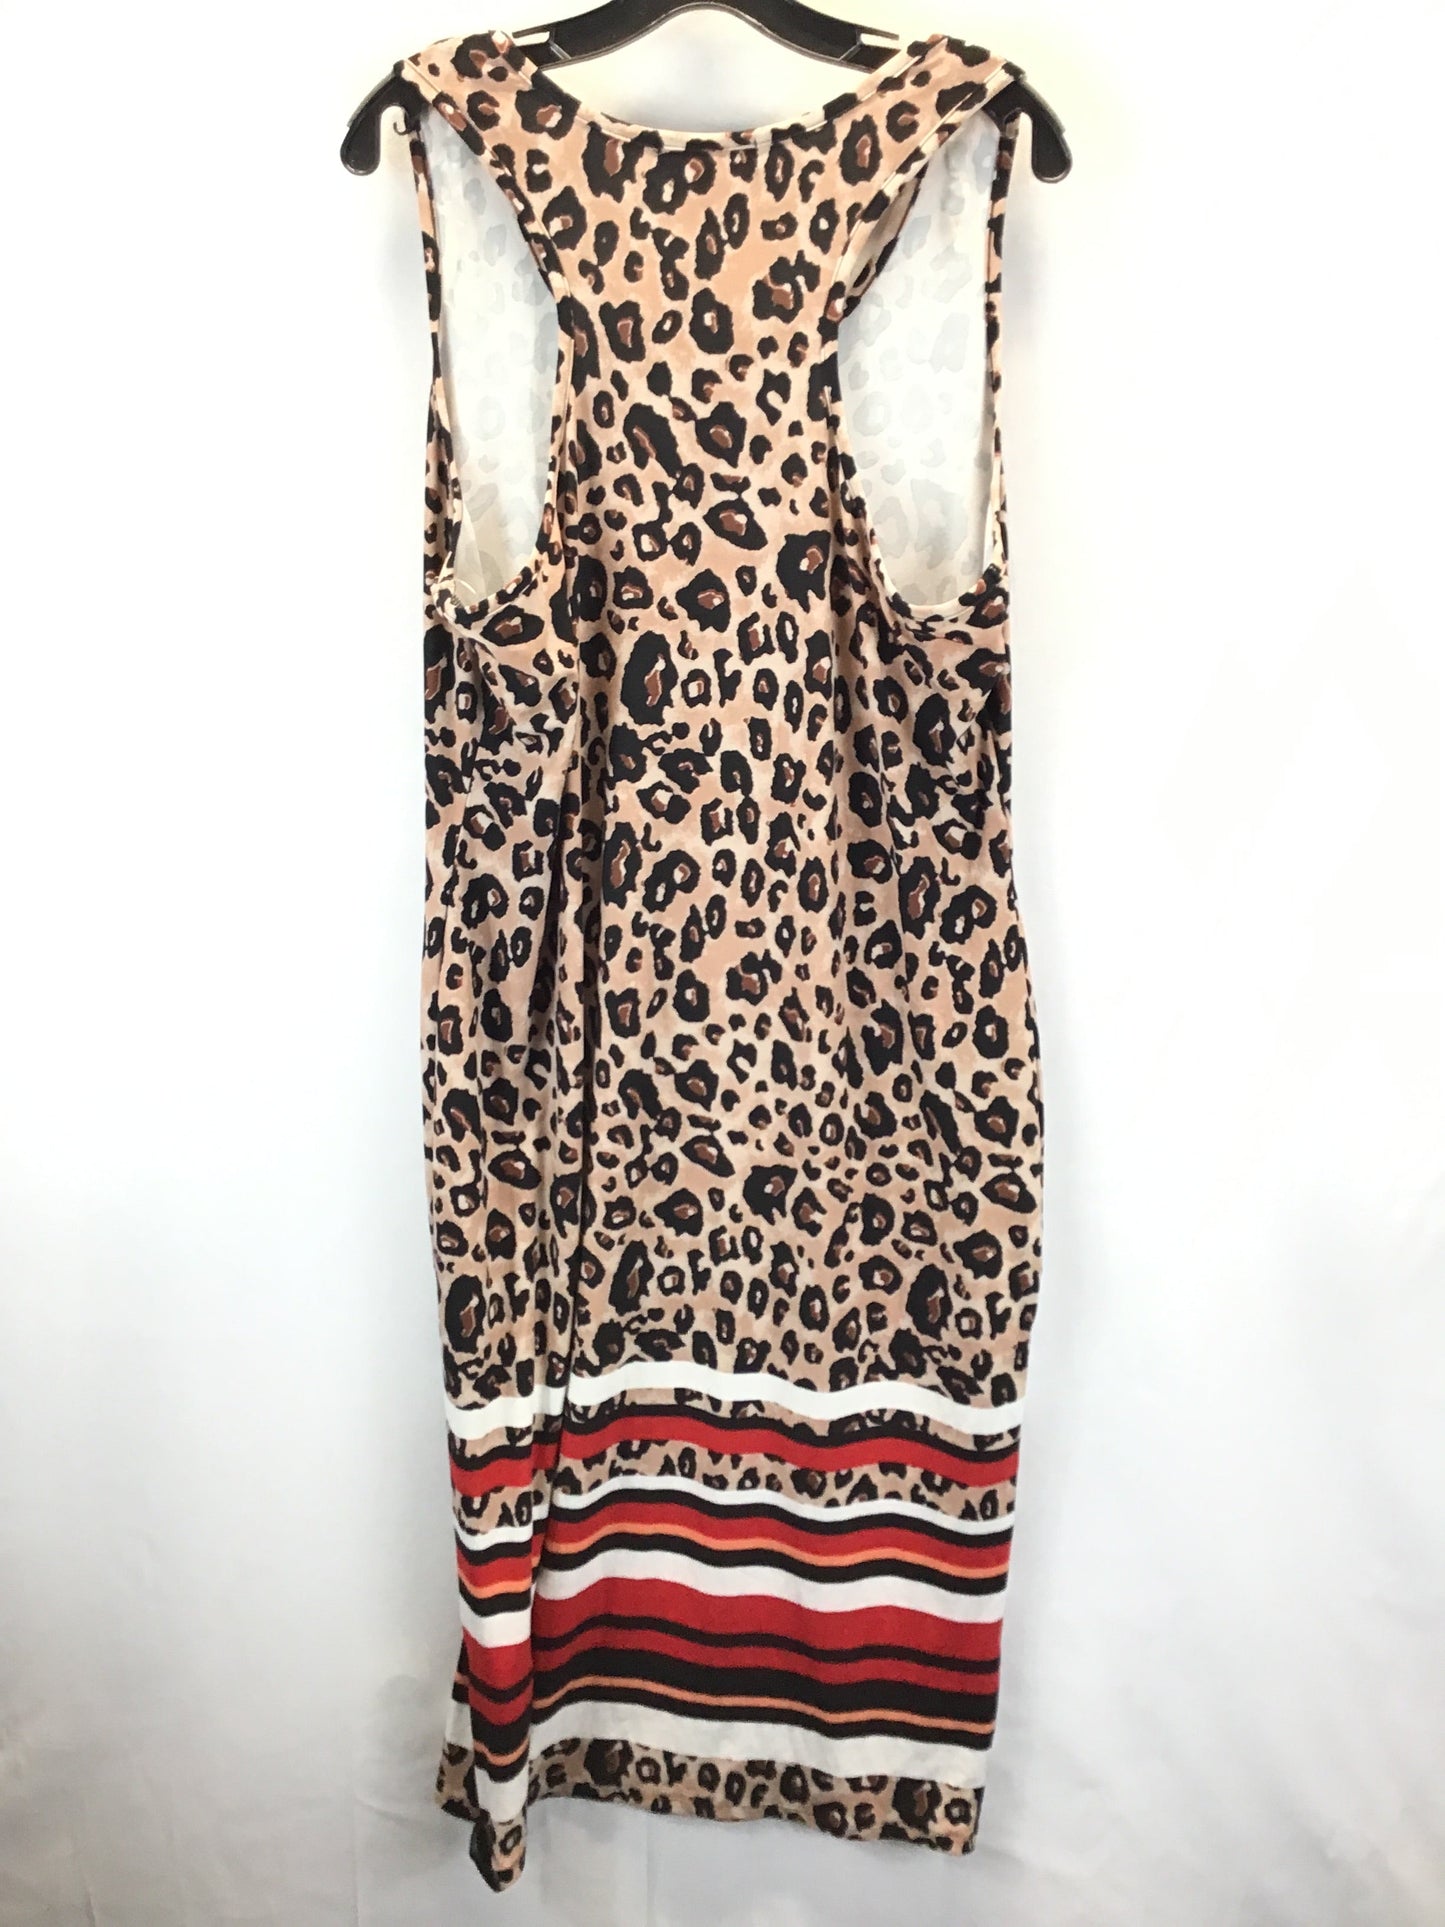 Leopard Print Dress Casual Maxi Derek Heart, Size 2x